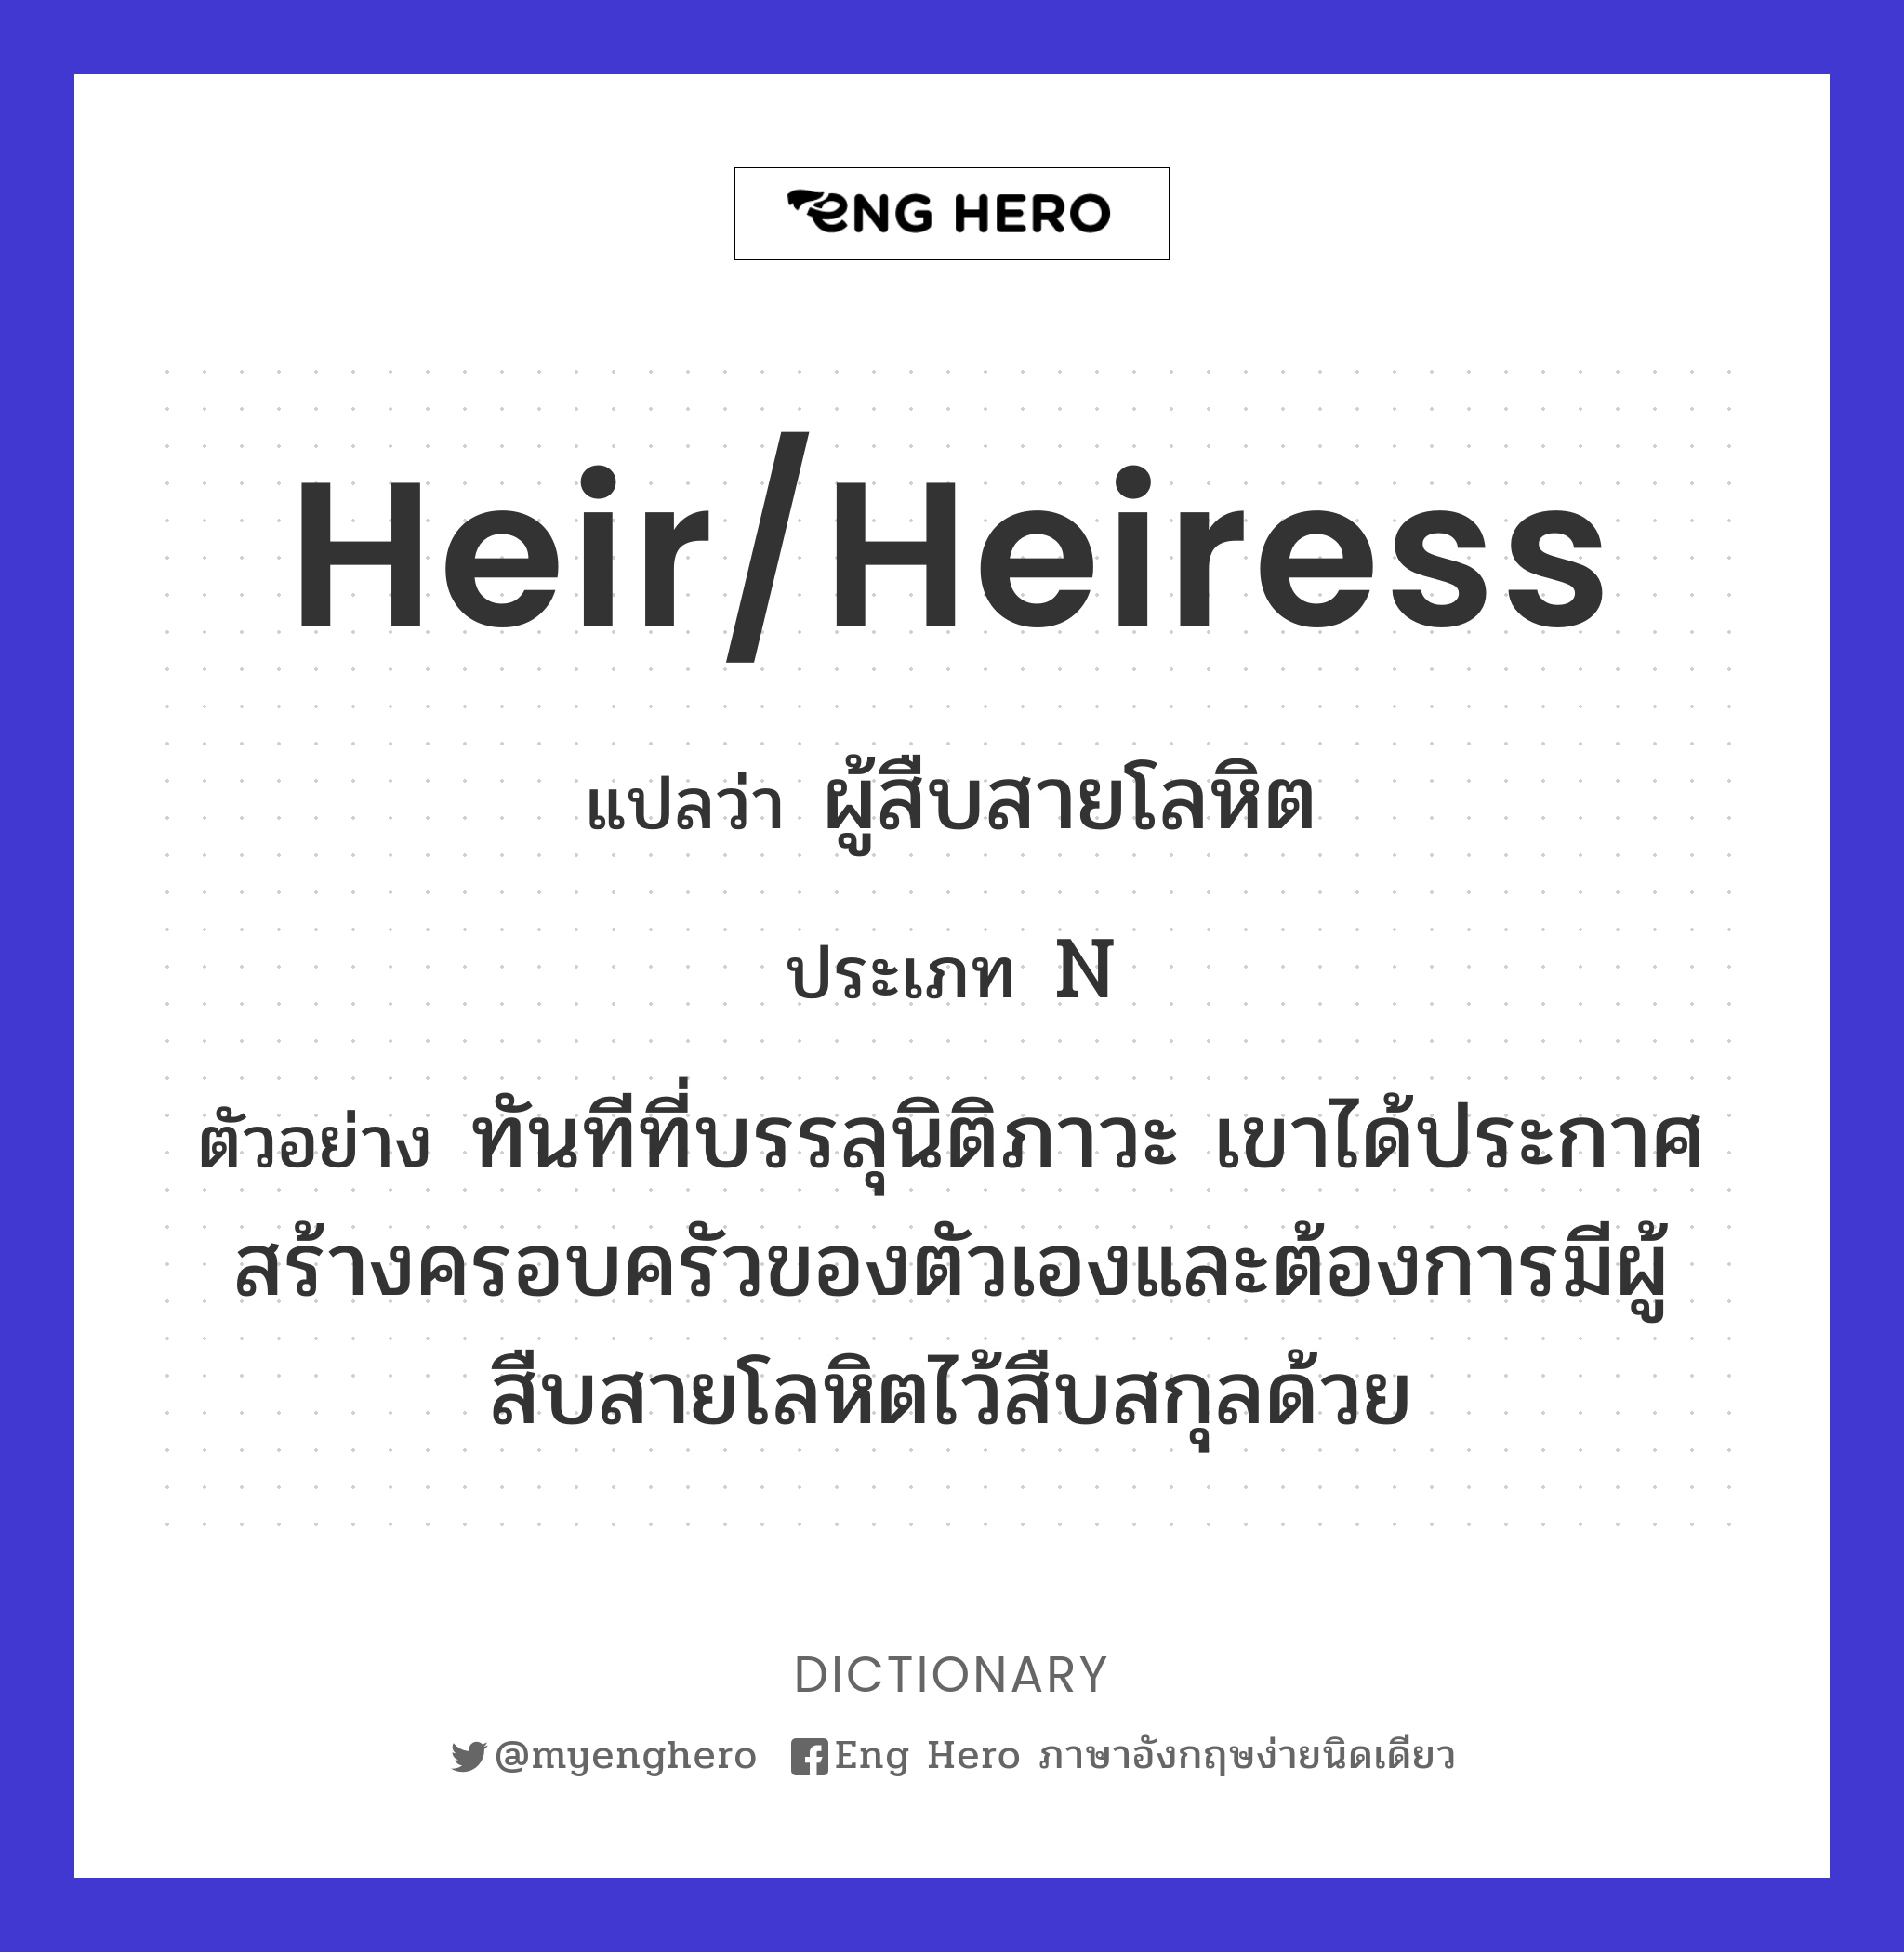 heir/heiress